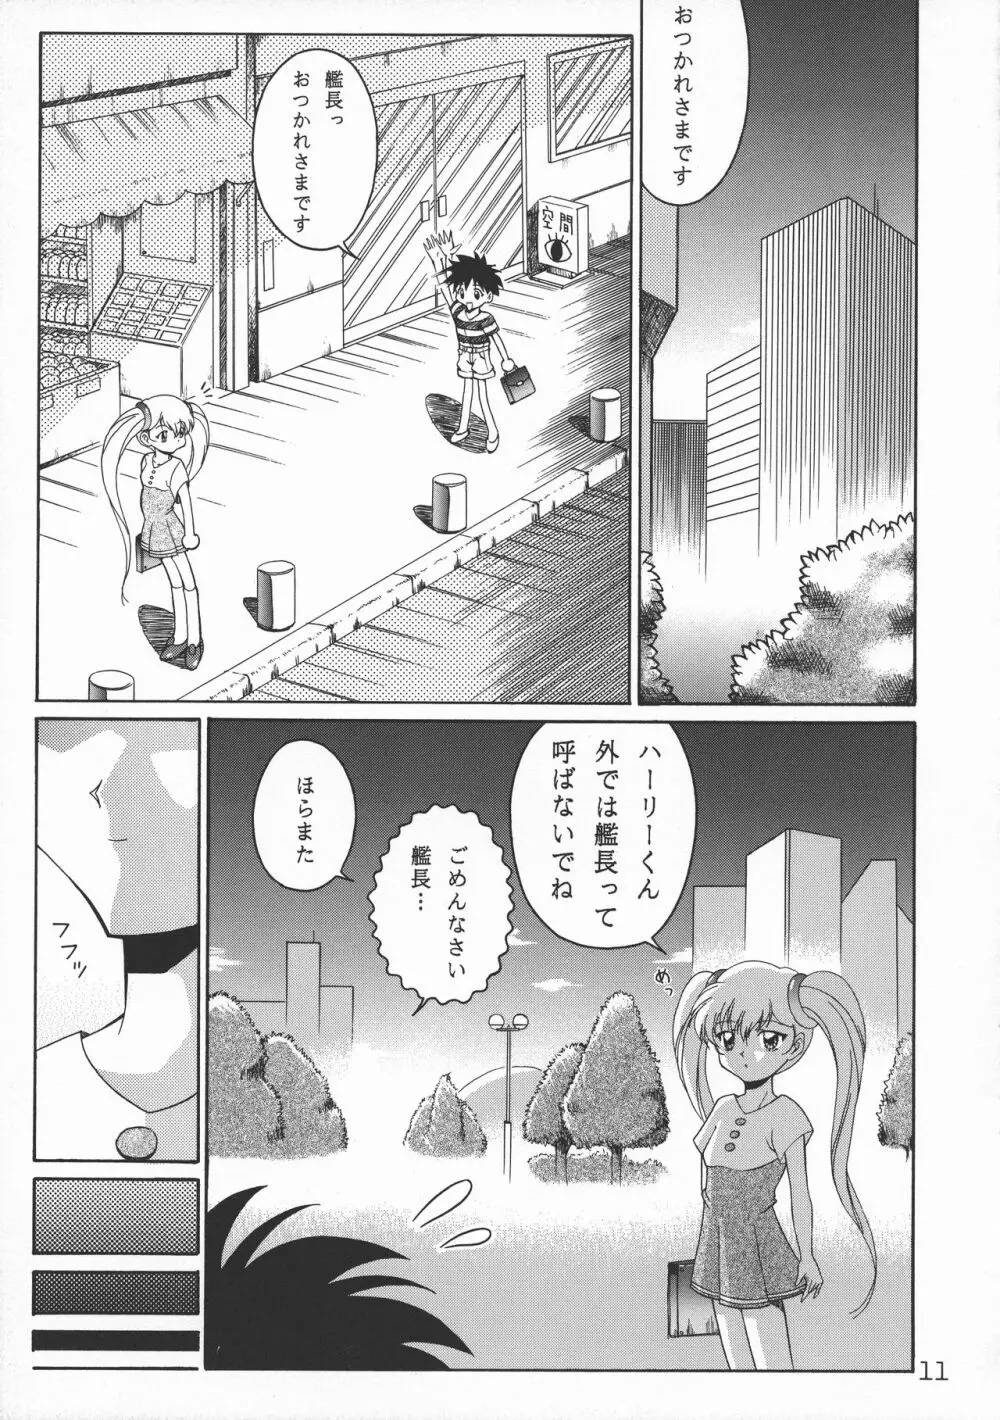 TOKUTEI 9 - page11